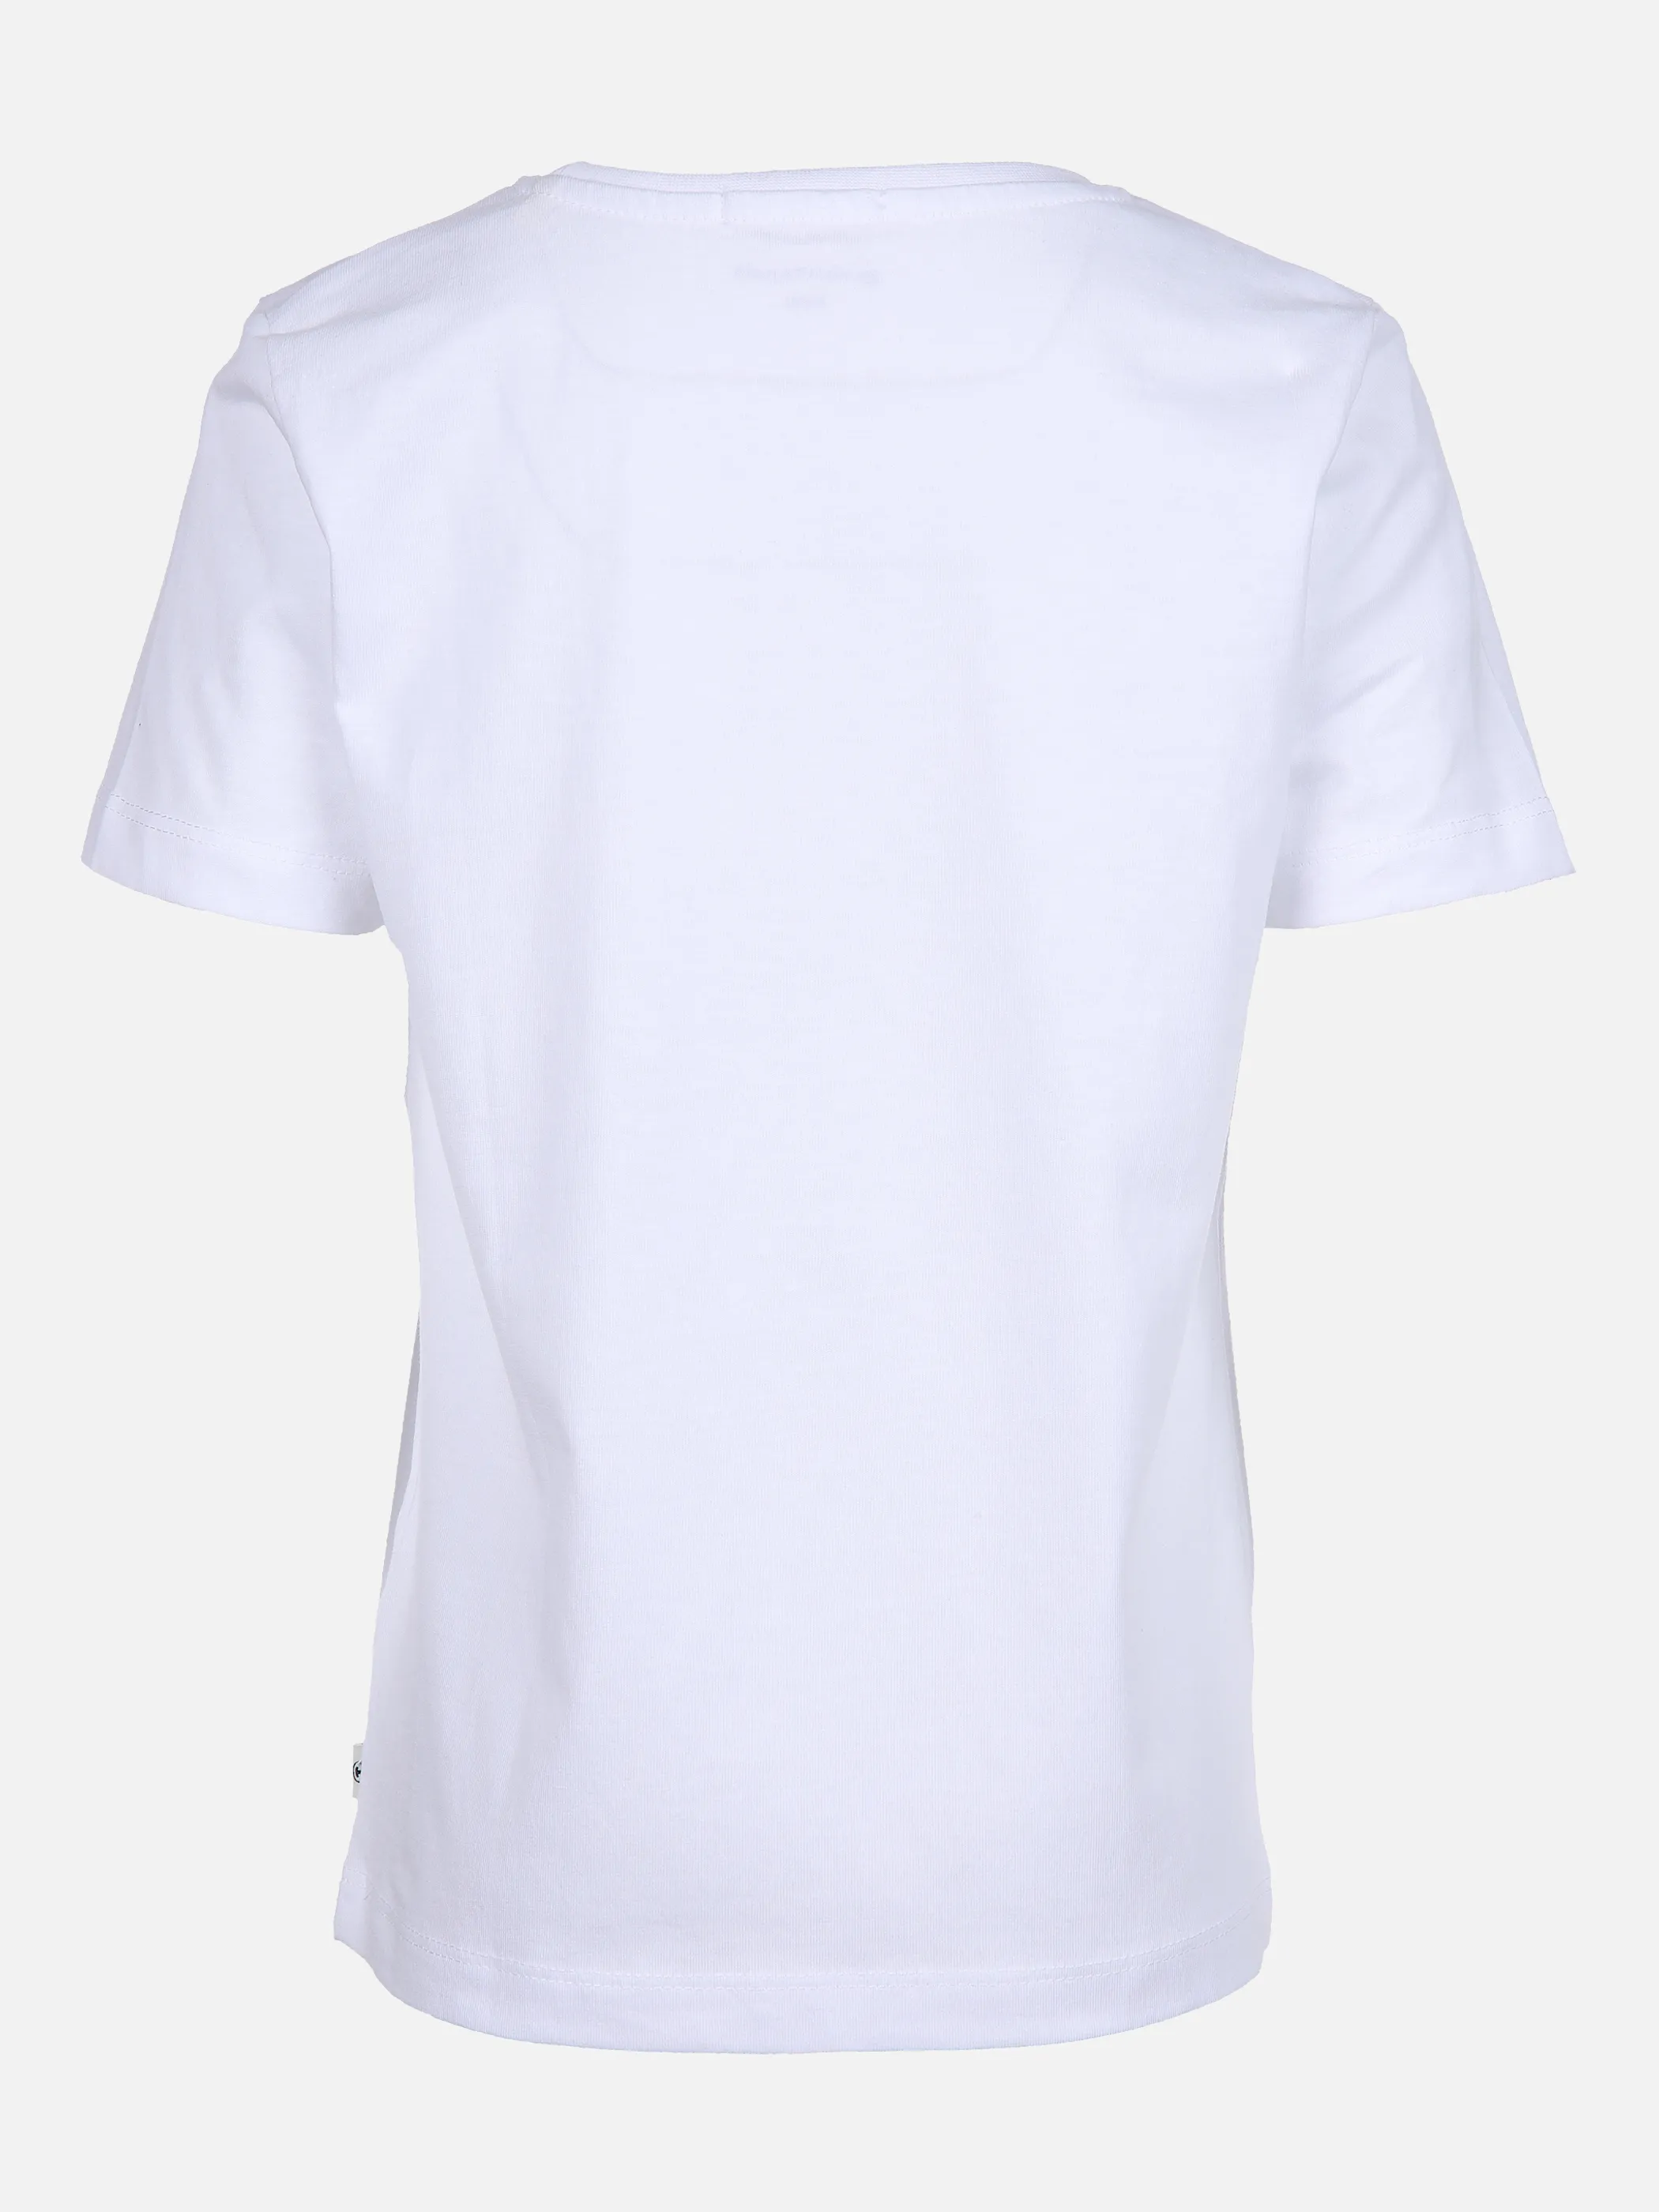 Tom Tailor 1031853 printed t-shirt Weiß 865847 20000 2